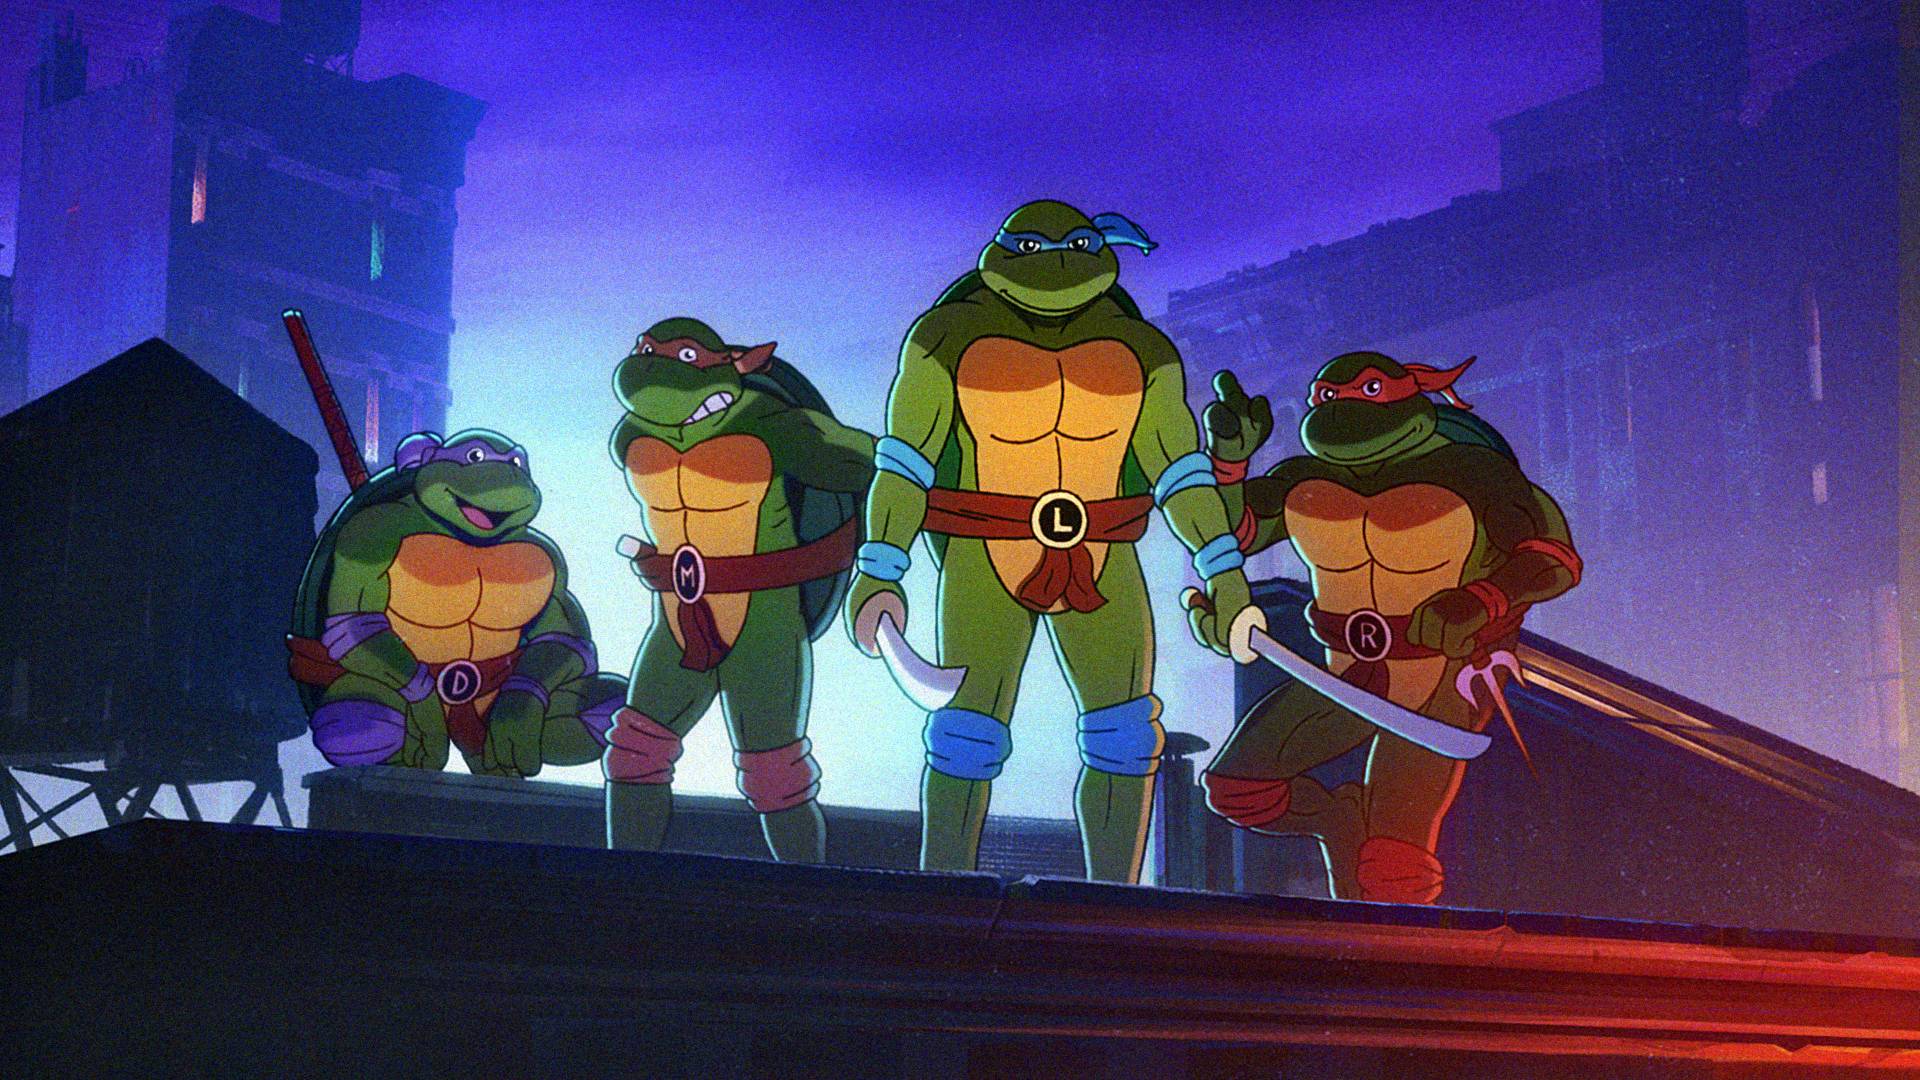 This new Teenage Mutant Ninja Turtles game looks totally radical, dude